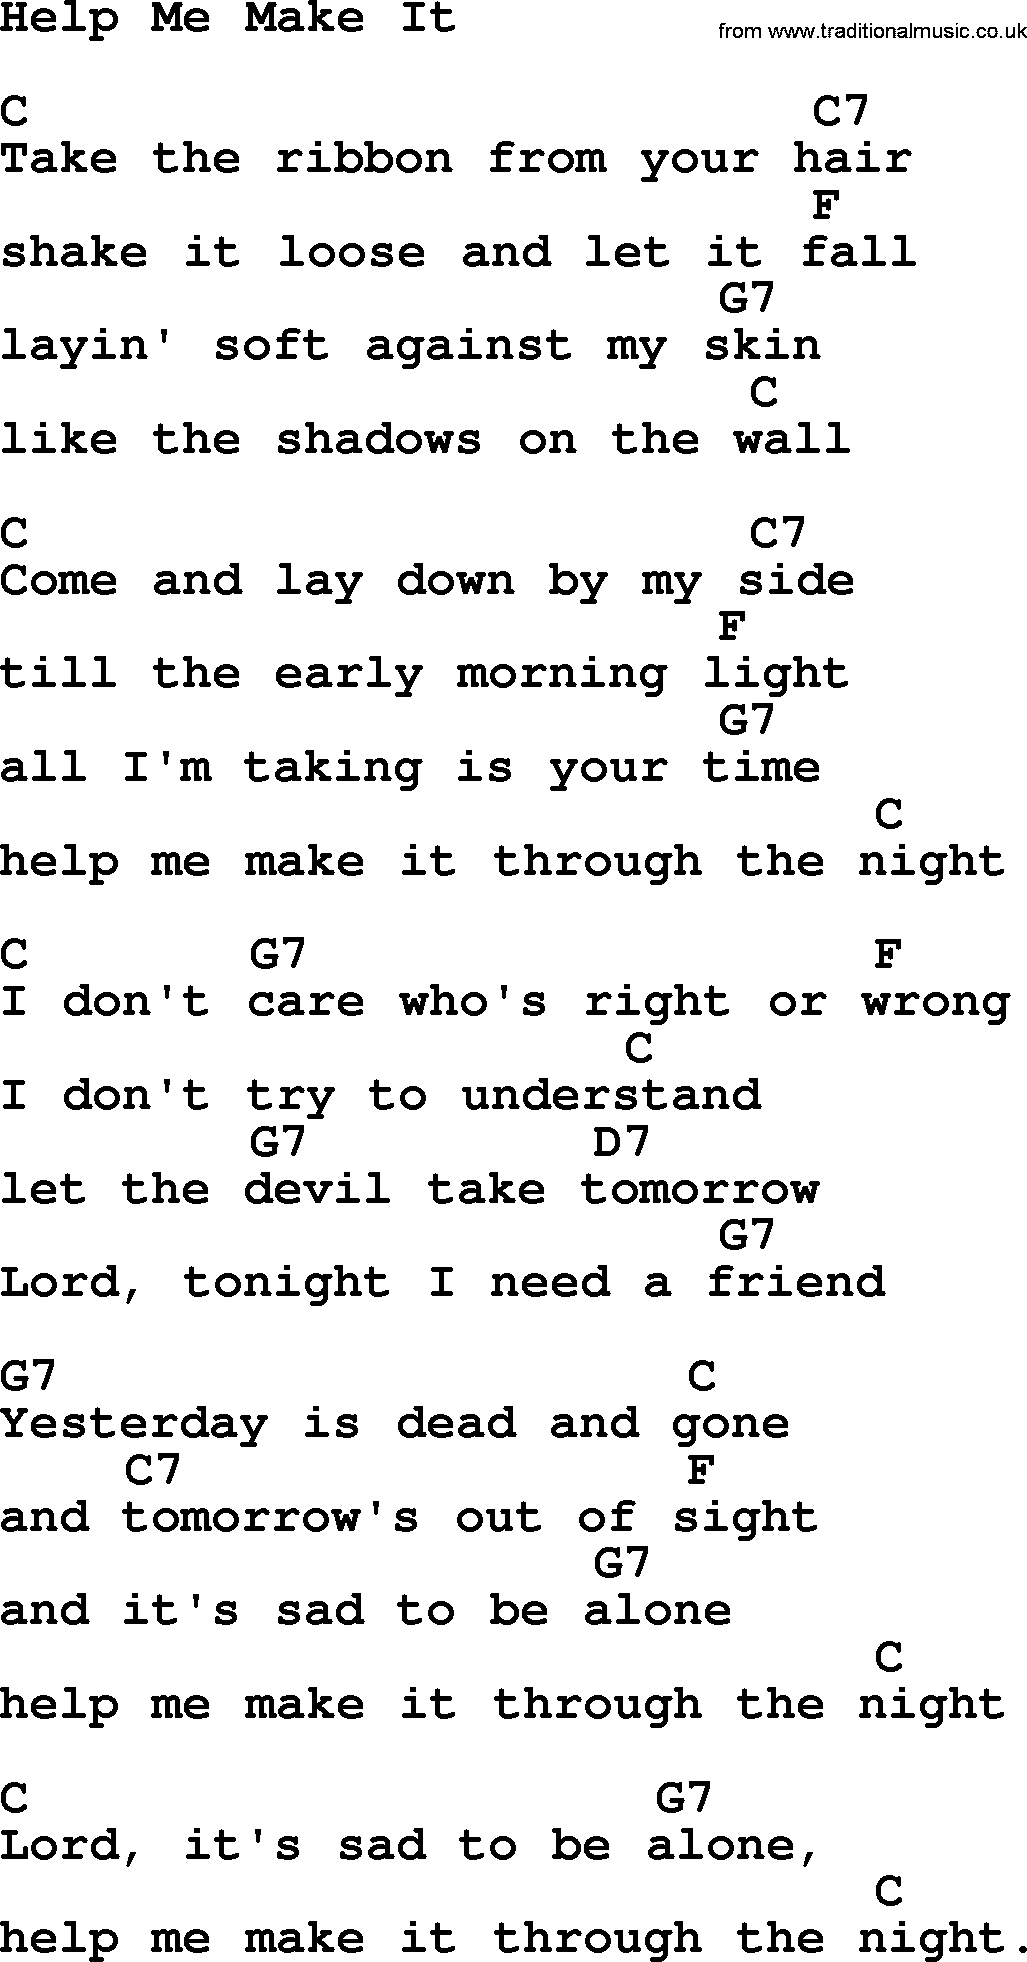 Kris Kristofferson song: Help Me Make It lyrics and chords